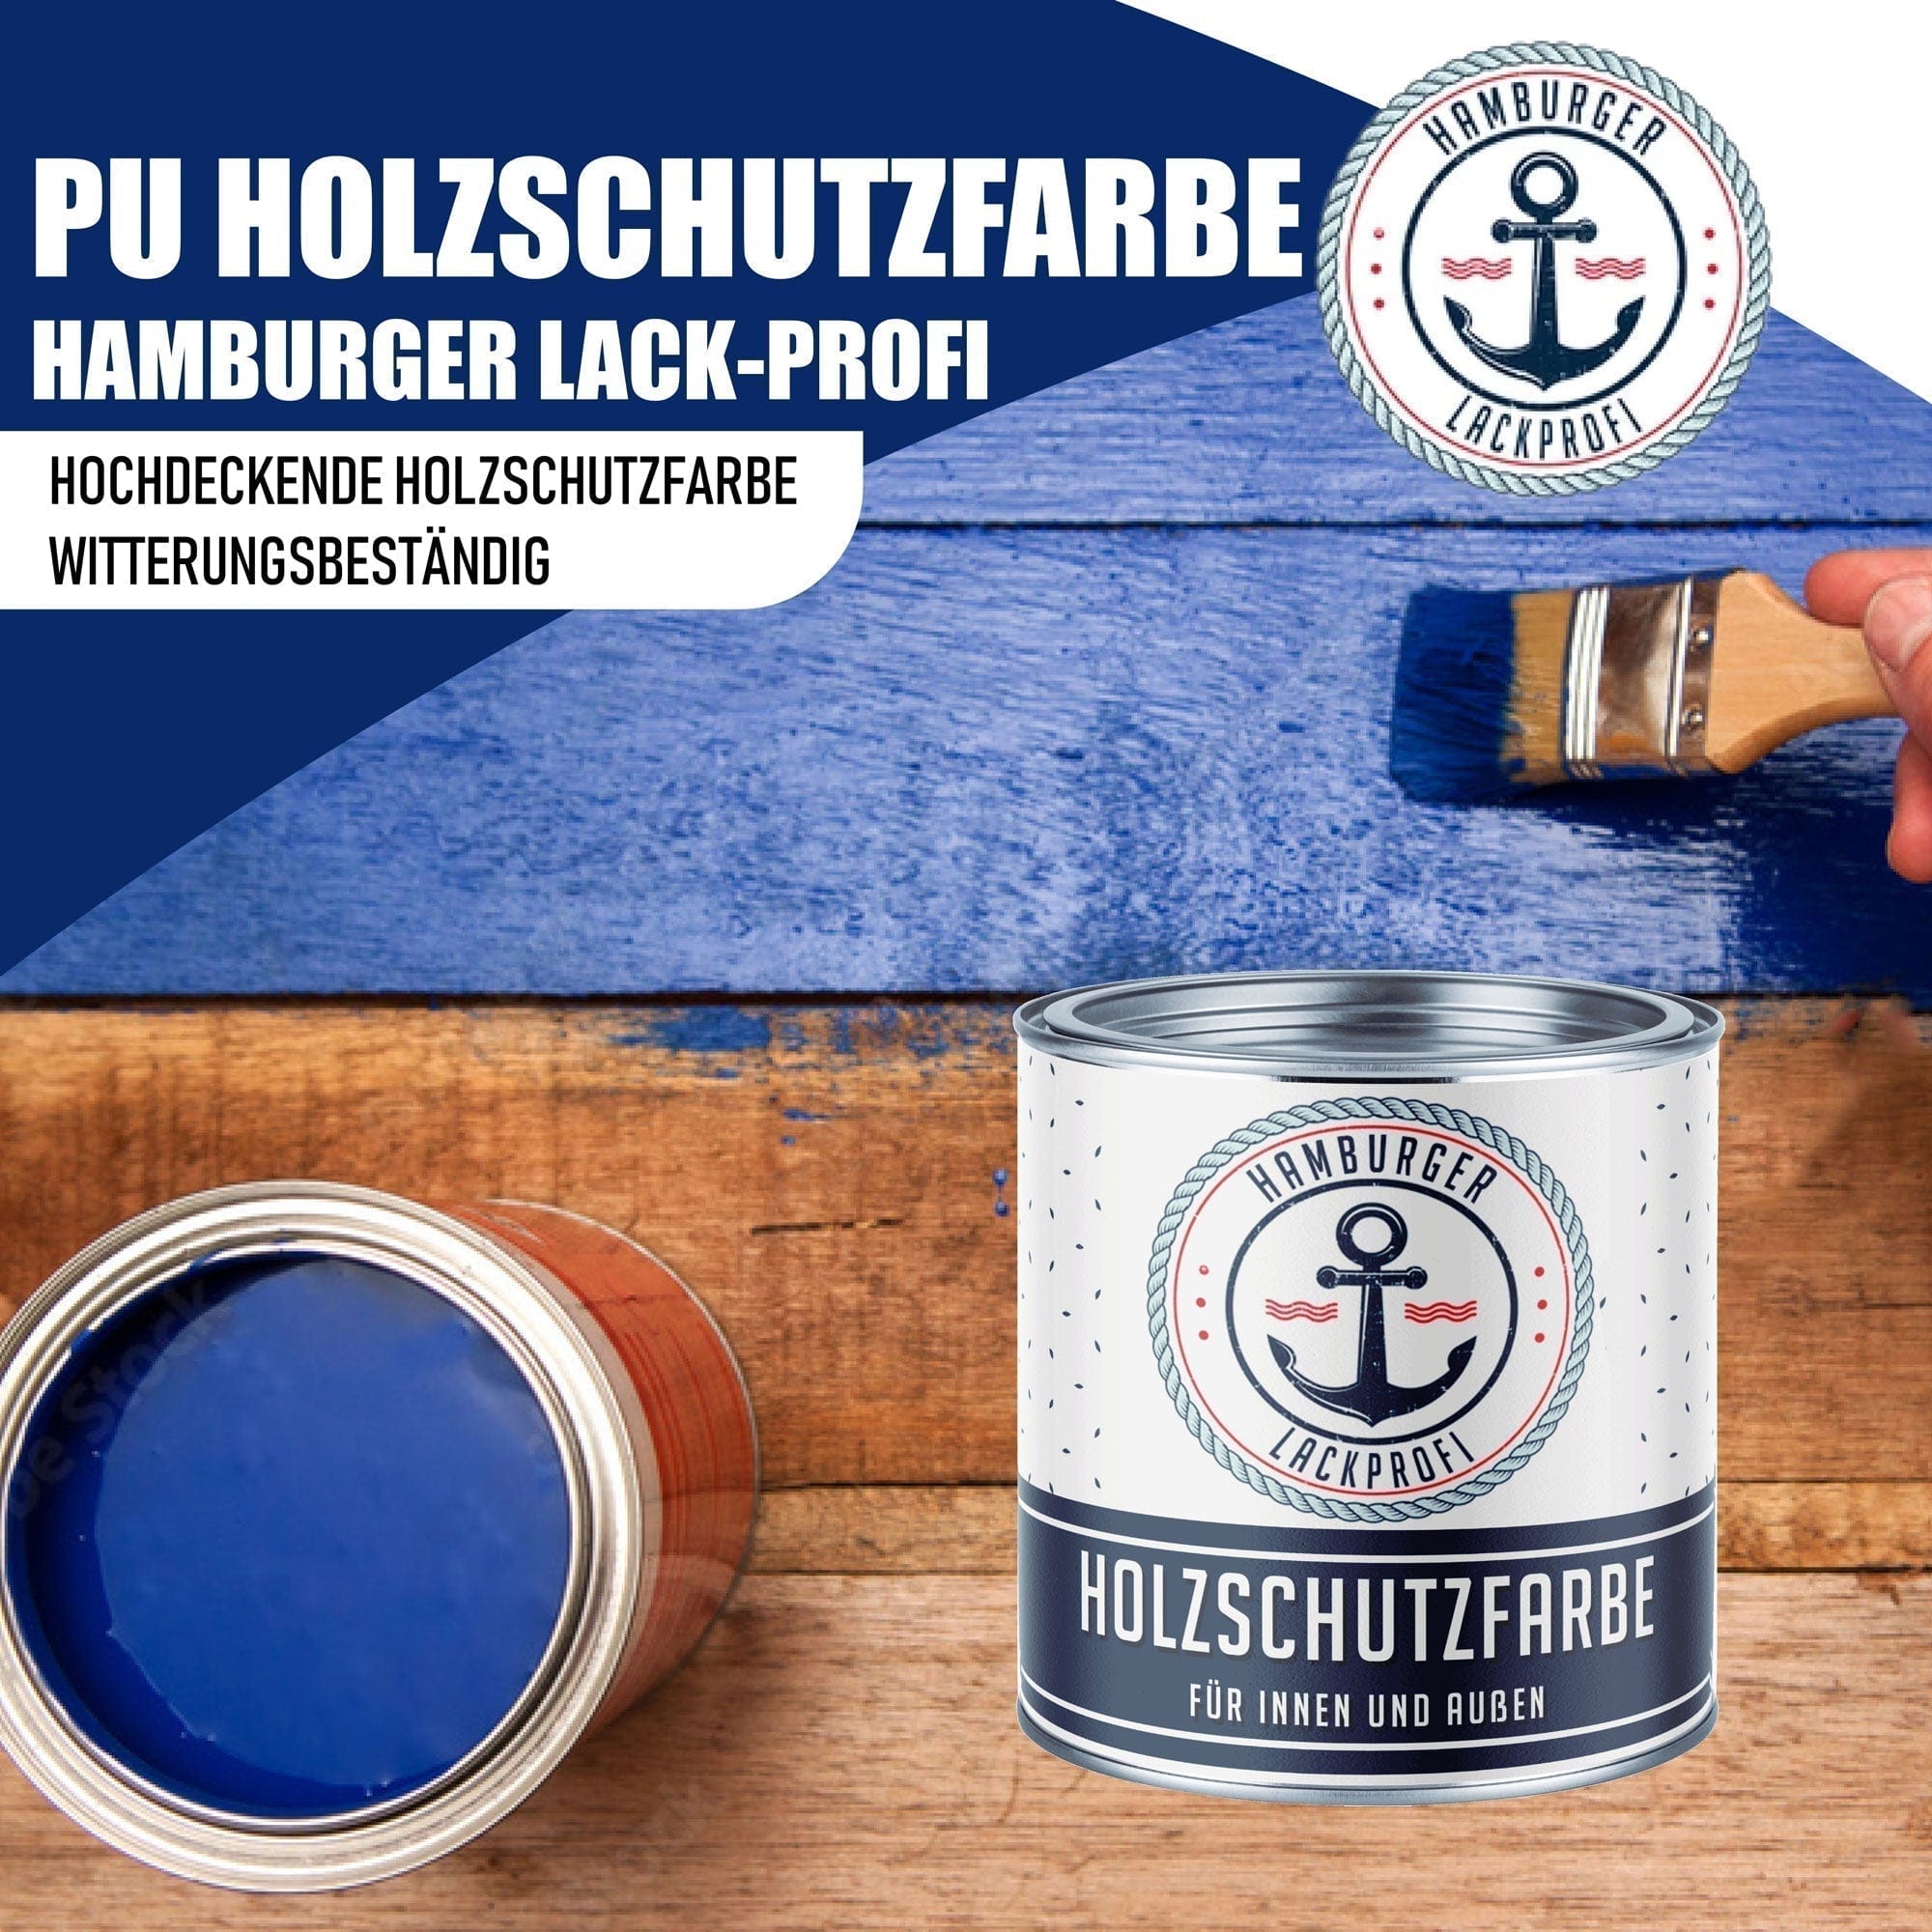 Hamburger Lack-Profi Lacke & Beschichtungen PU Holzschutzfarbe RAL 5018 Türkisblau - Wetterschutzfarbe